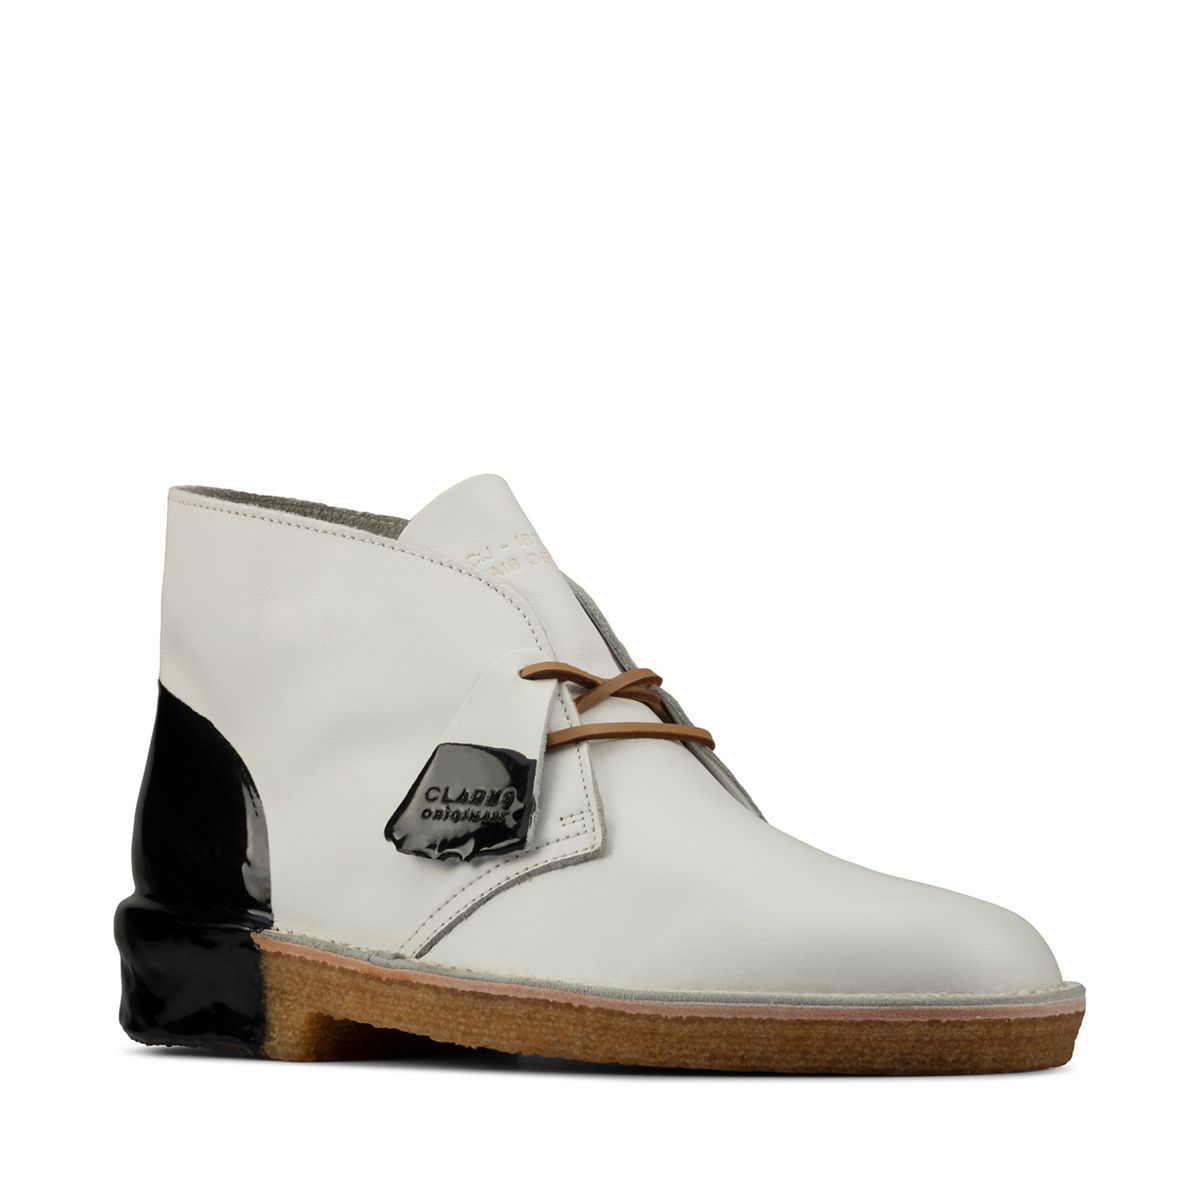 yermo Mirar Tres Clarks Mens Originals Desert Boot Limited Edition Made in ITALY | eBay